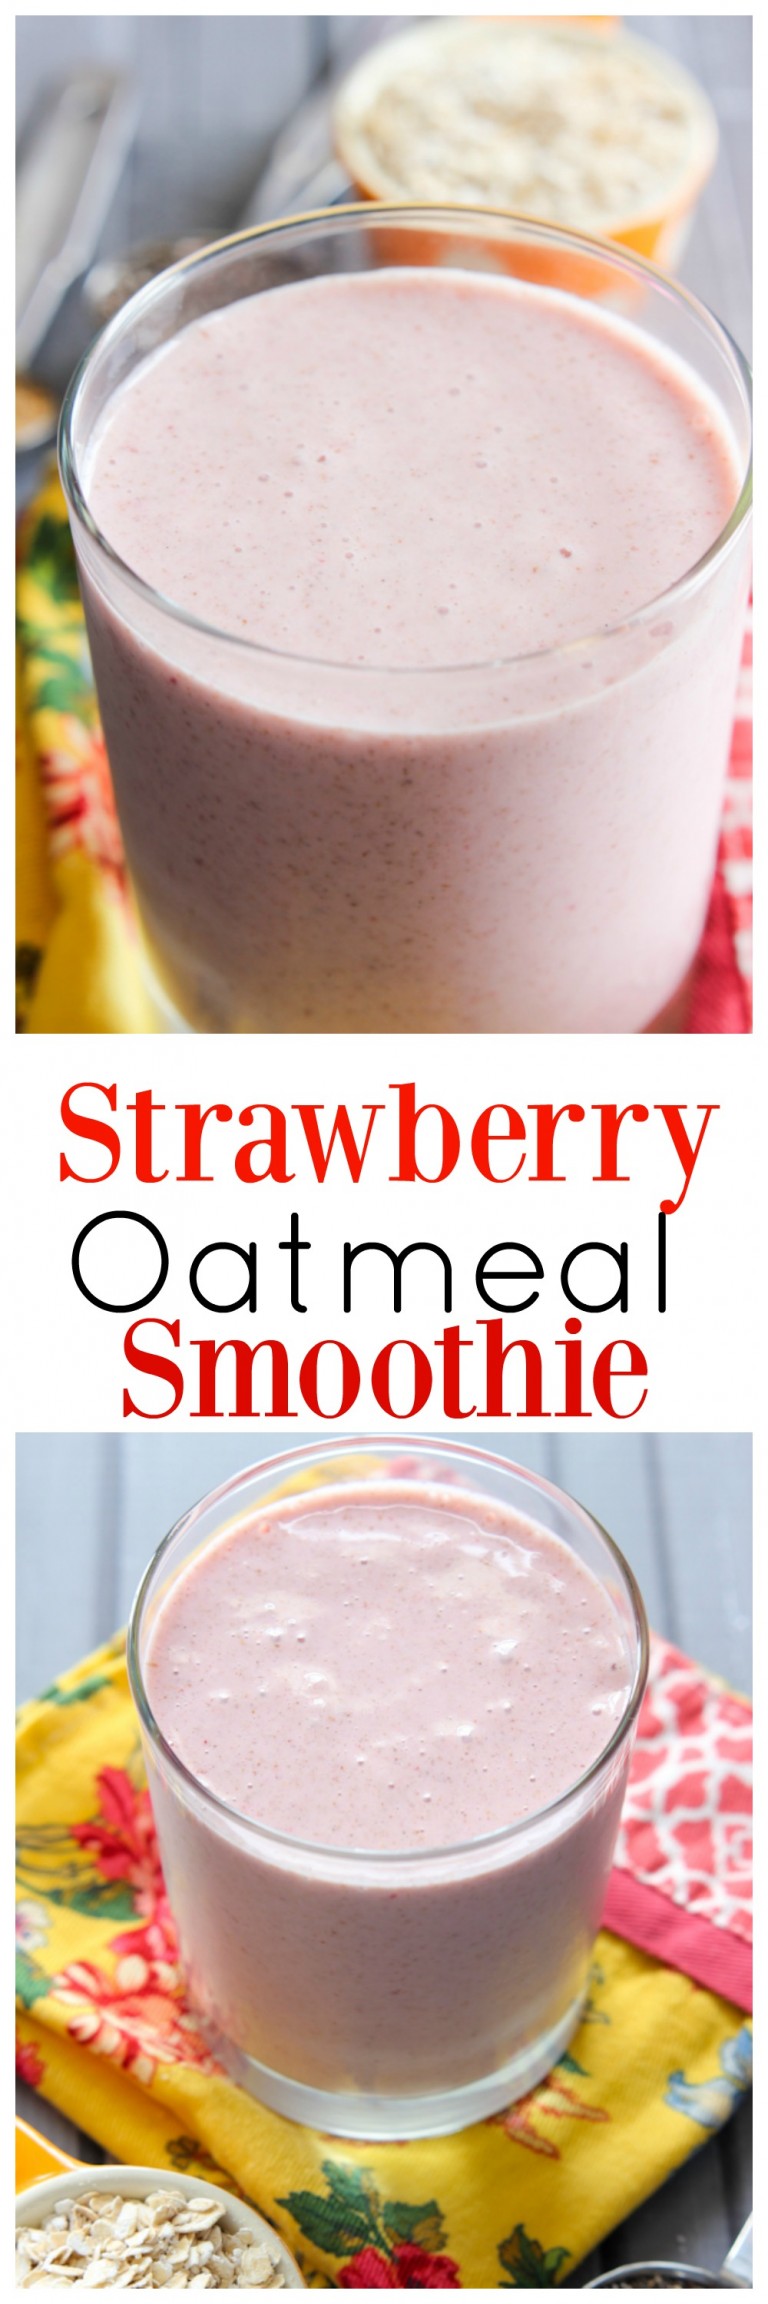 Strawberry Oatmeal Smoothie | Mandy's Recipe Box